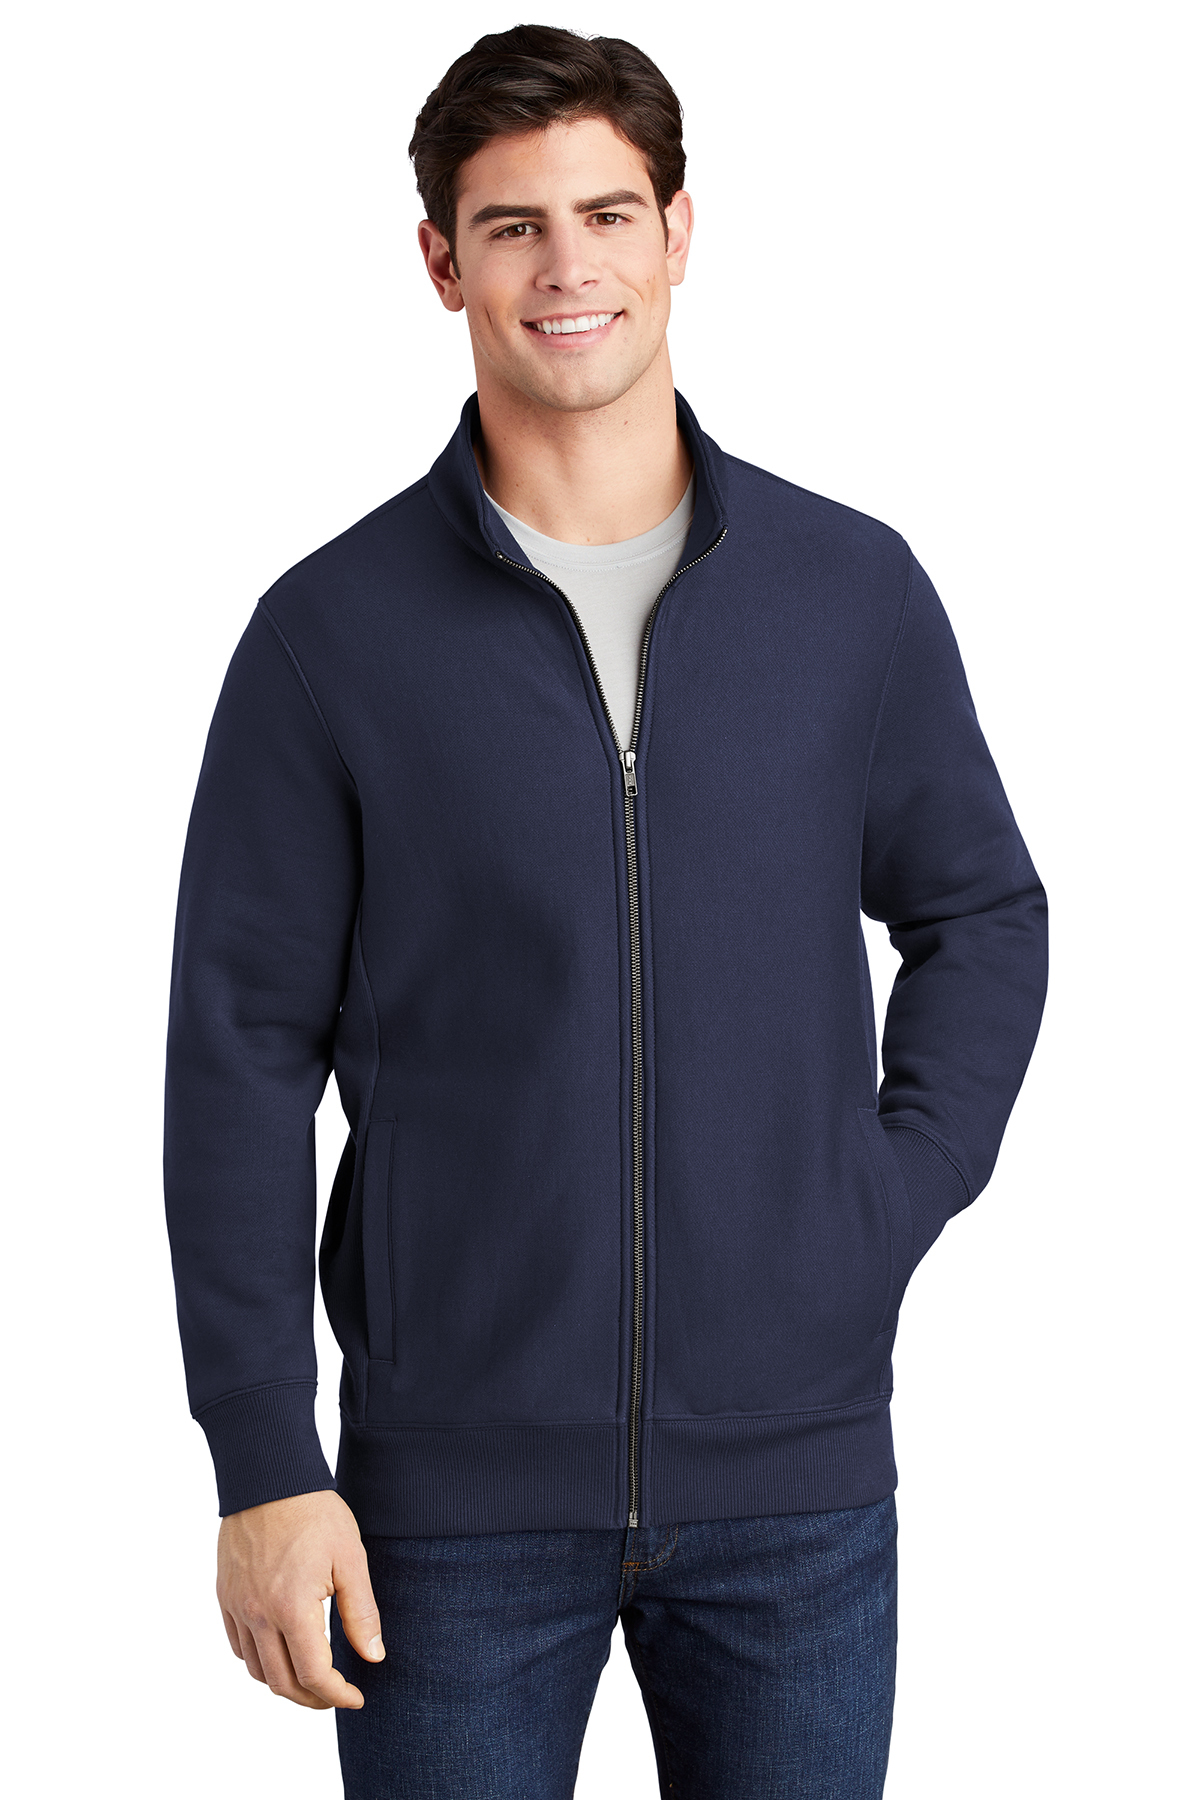 Sport-Tek Men's Full Zip Sweatshirt,X-Large,Graphite Hthr